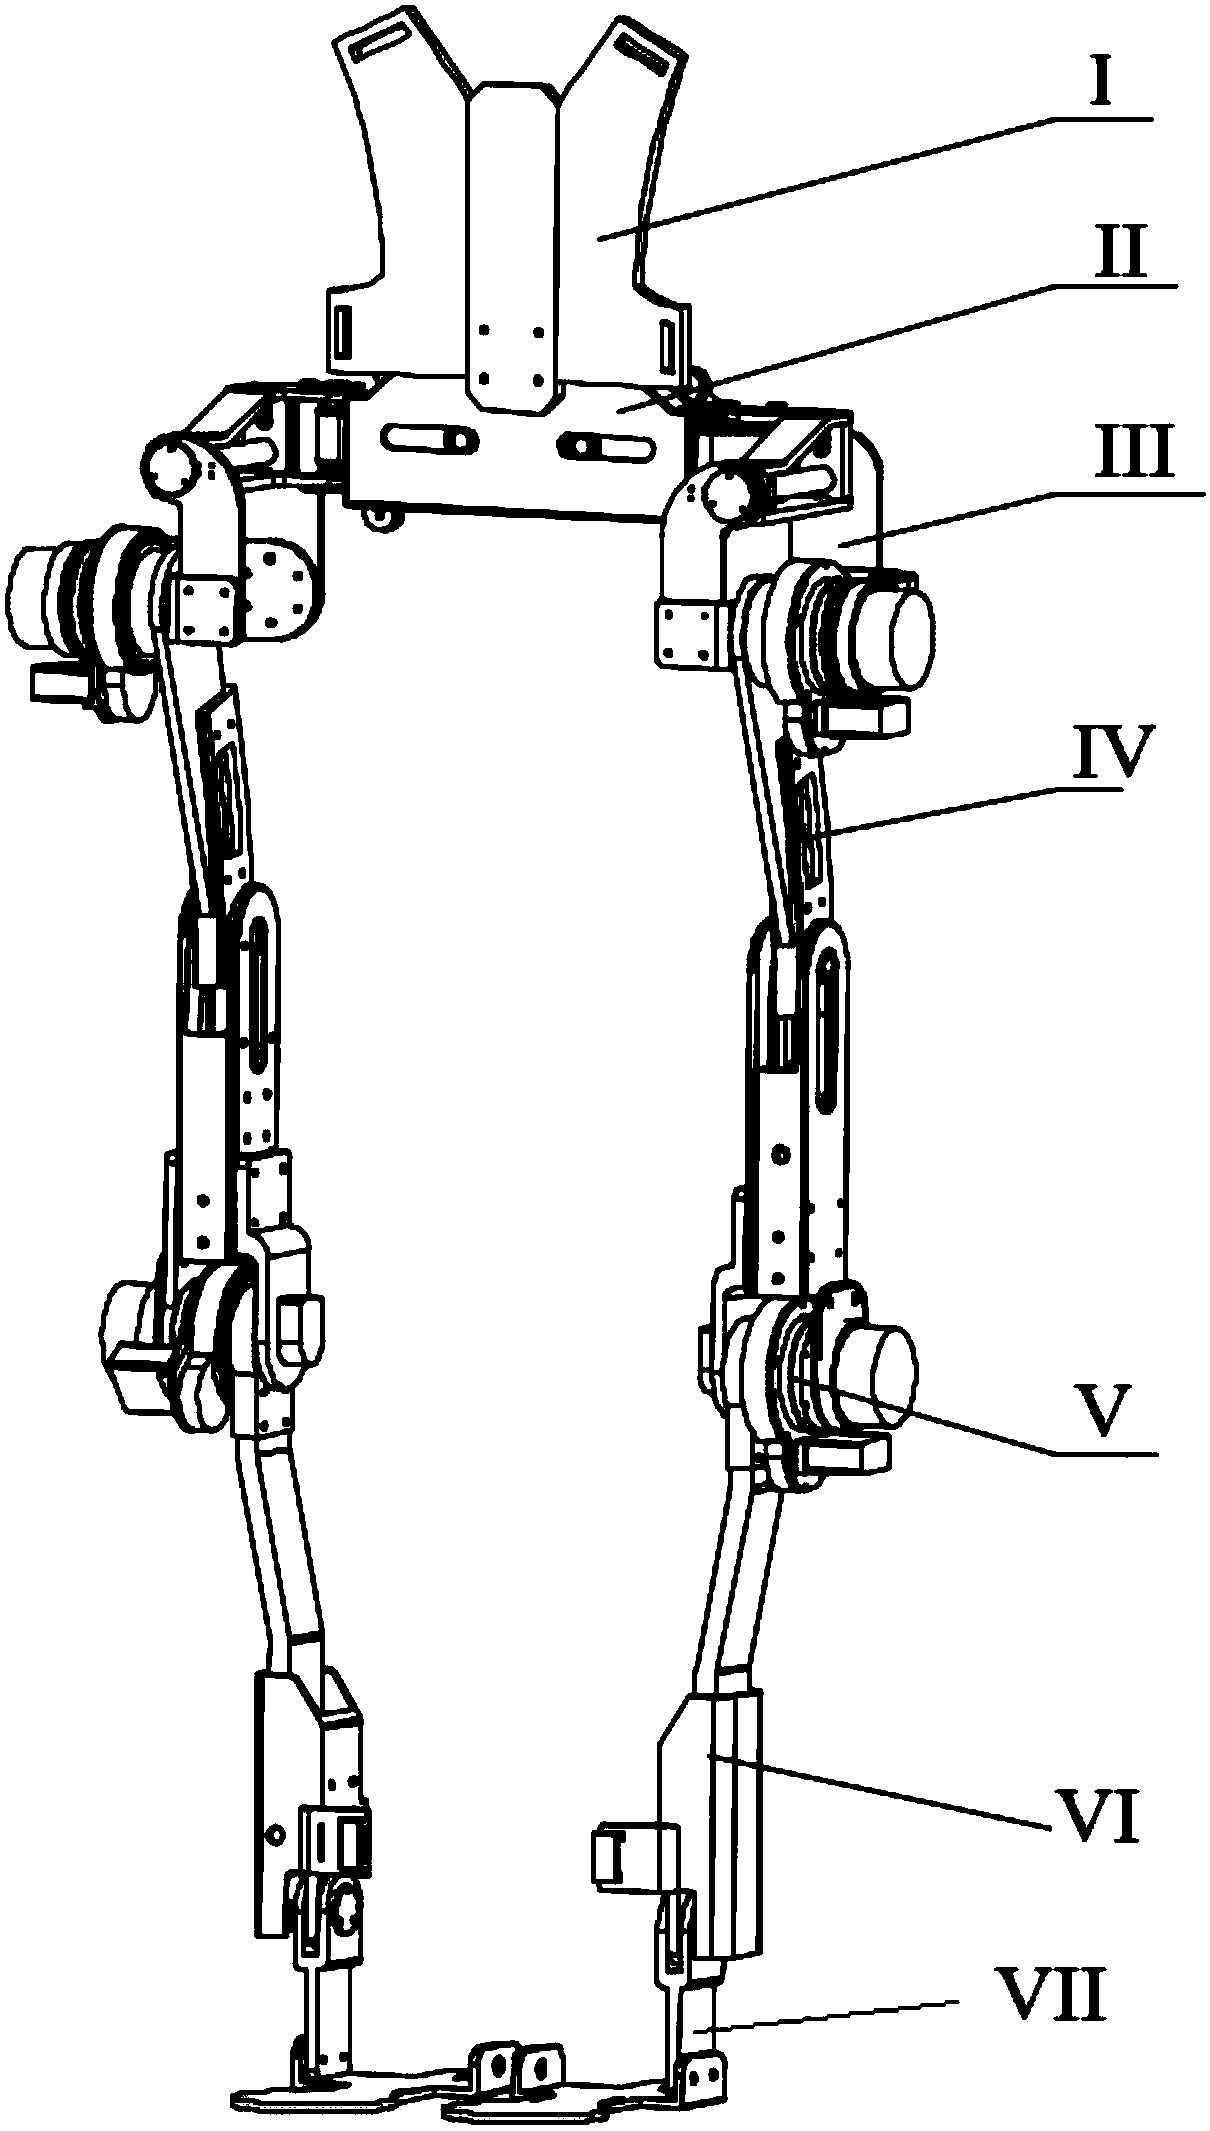 Variable stiffness lower limb external skeleton robot